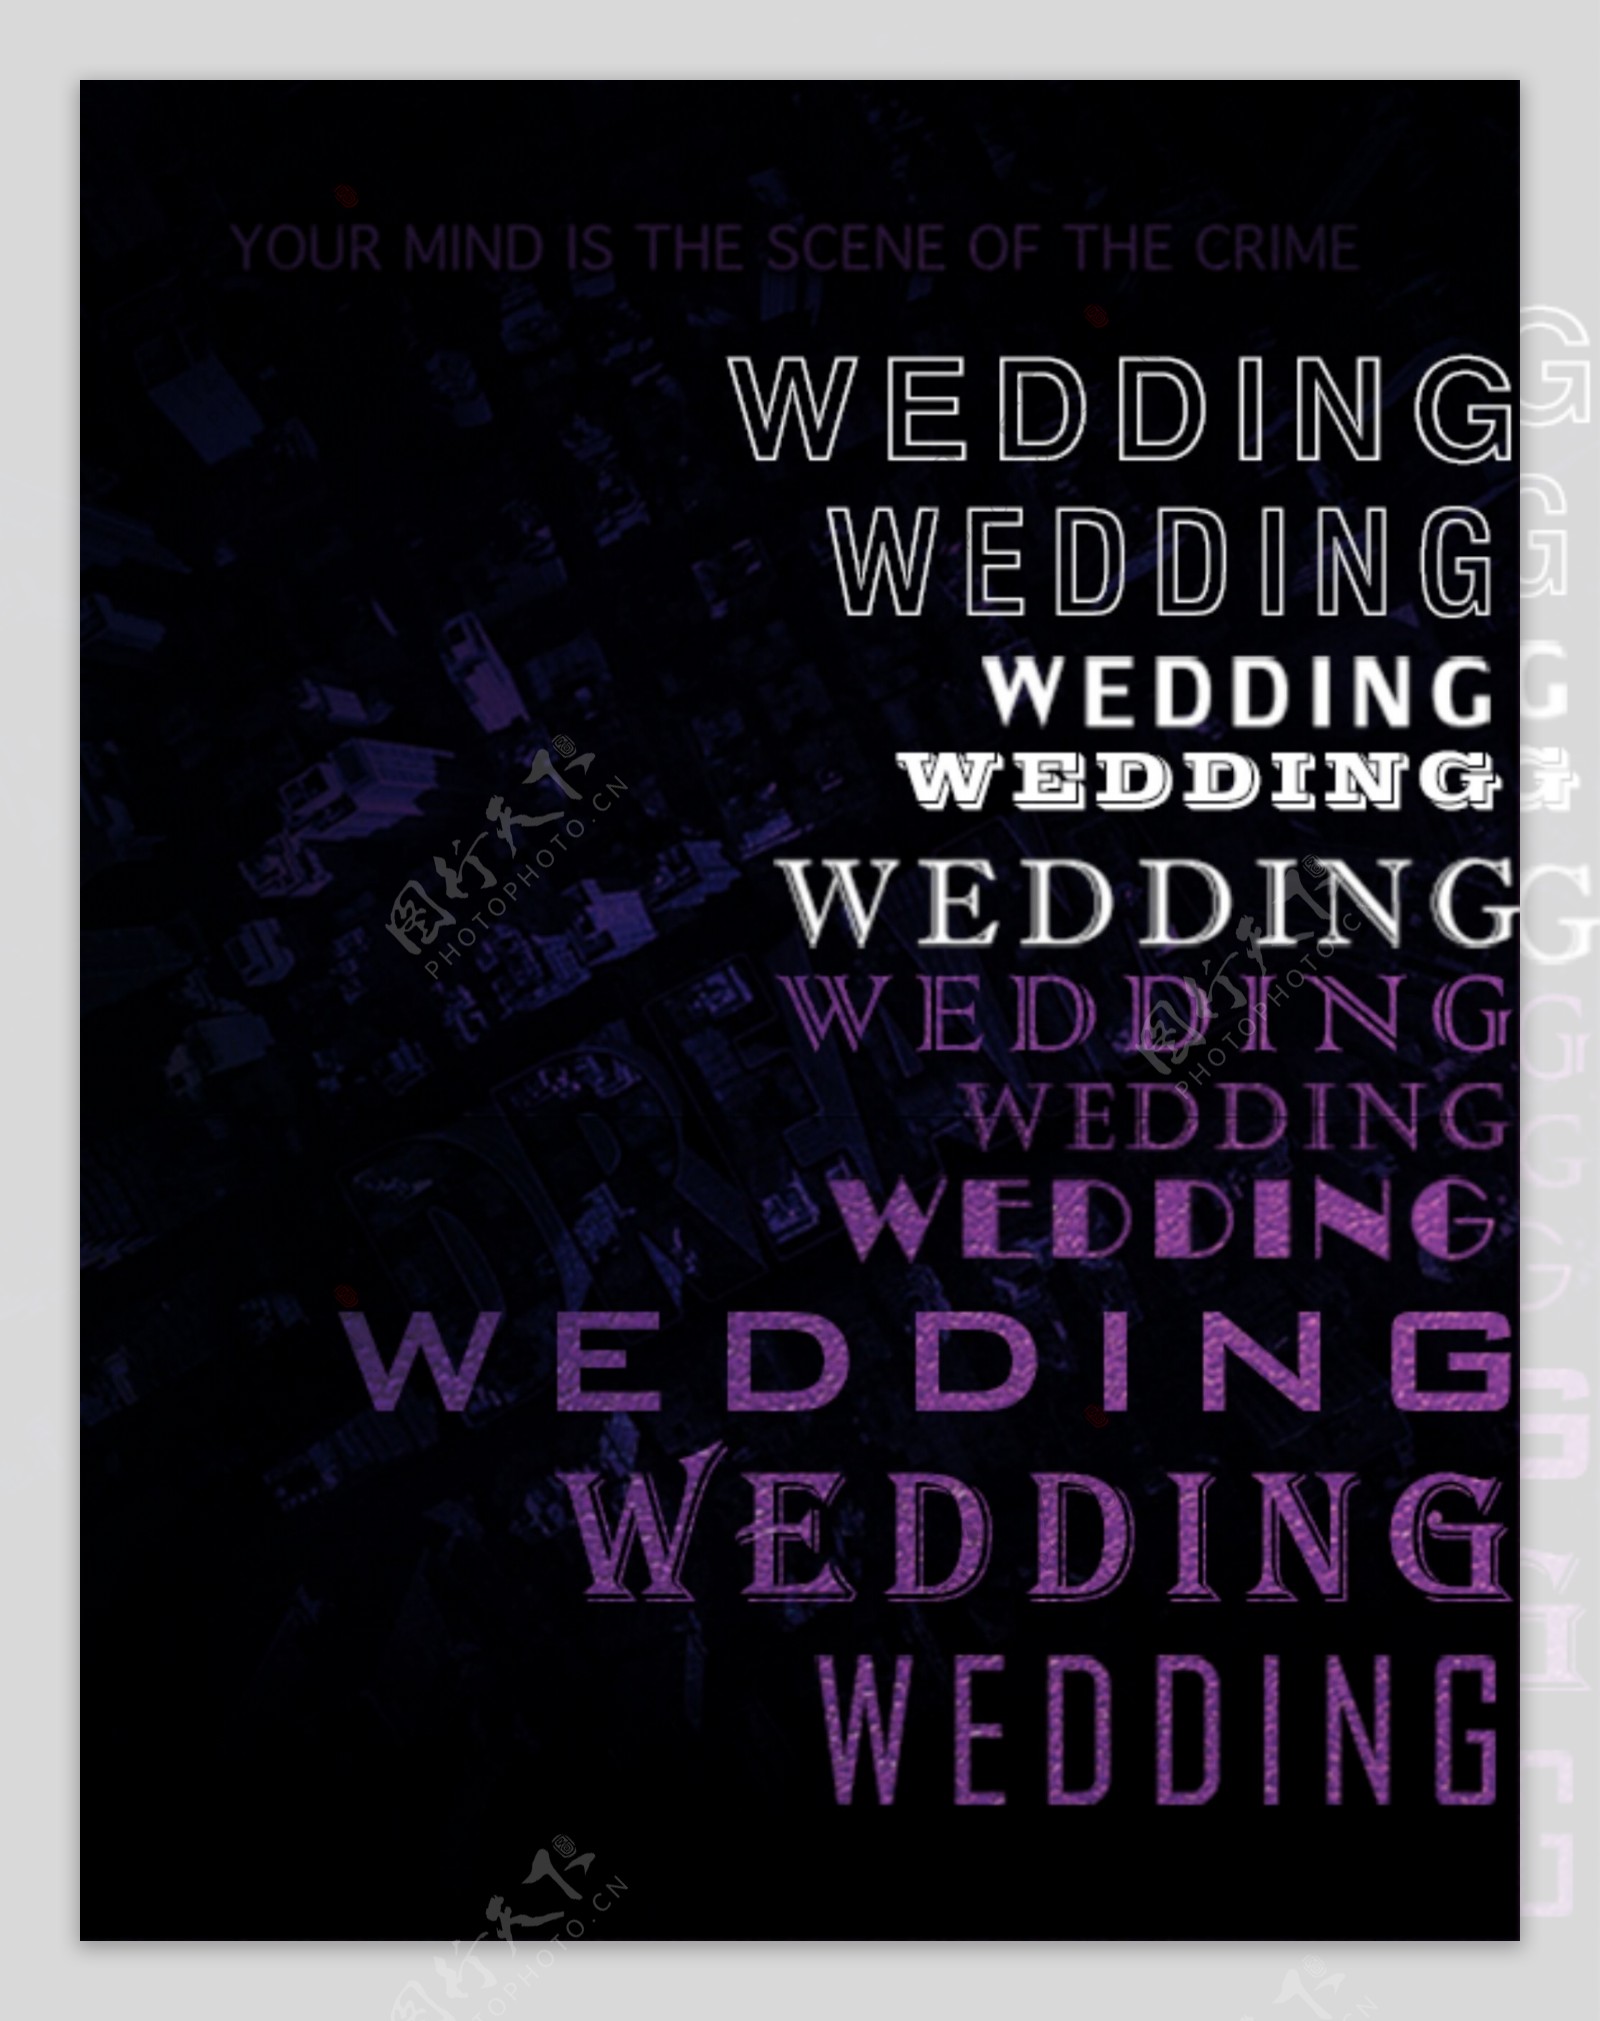 WEDDING暗黑神秘海报